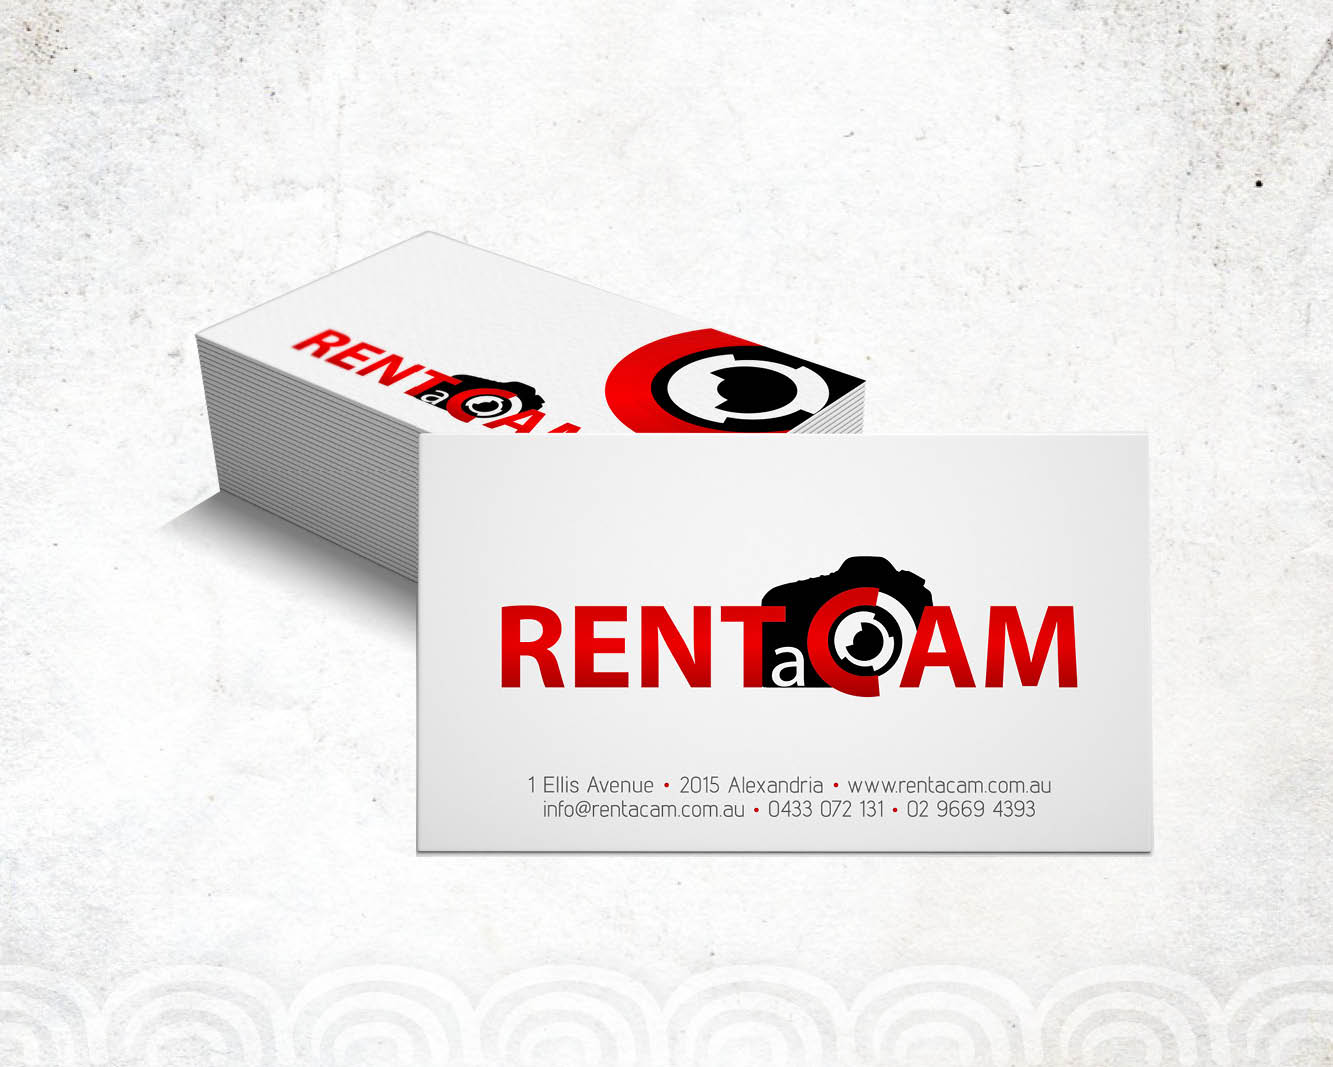 RENTaCAM SYdney Business card design - The Design